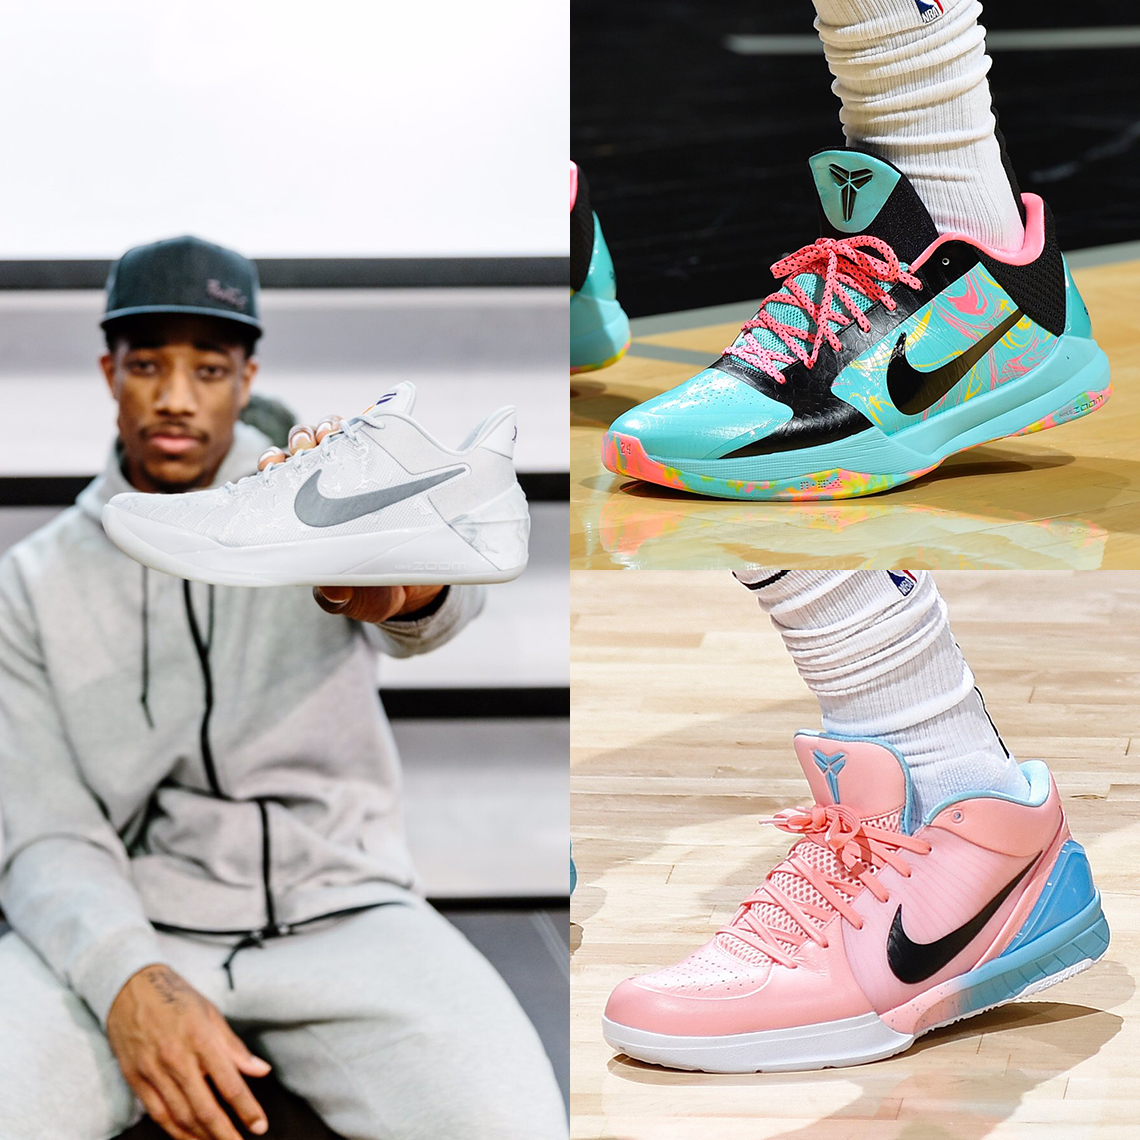 UNBOXING: Kobe Bryant LA Lakers Mamba Edition Nike Authentic NBA